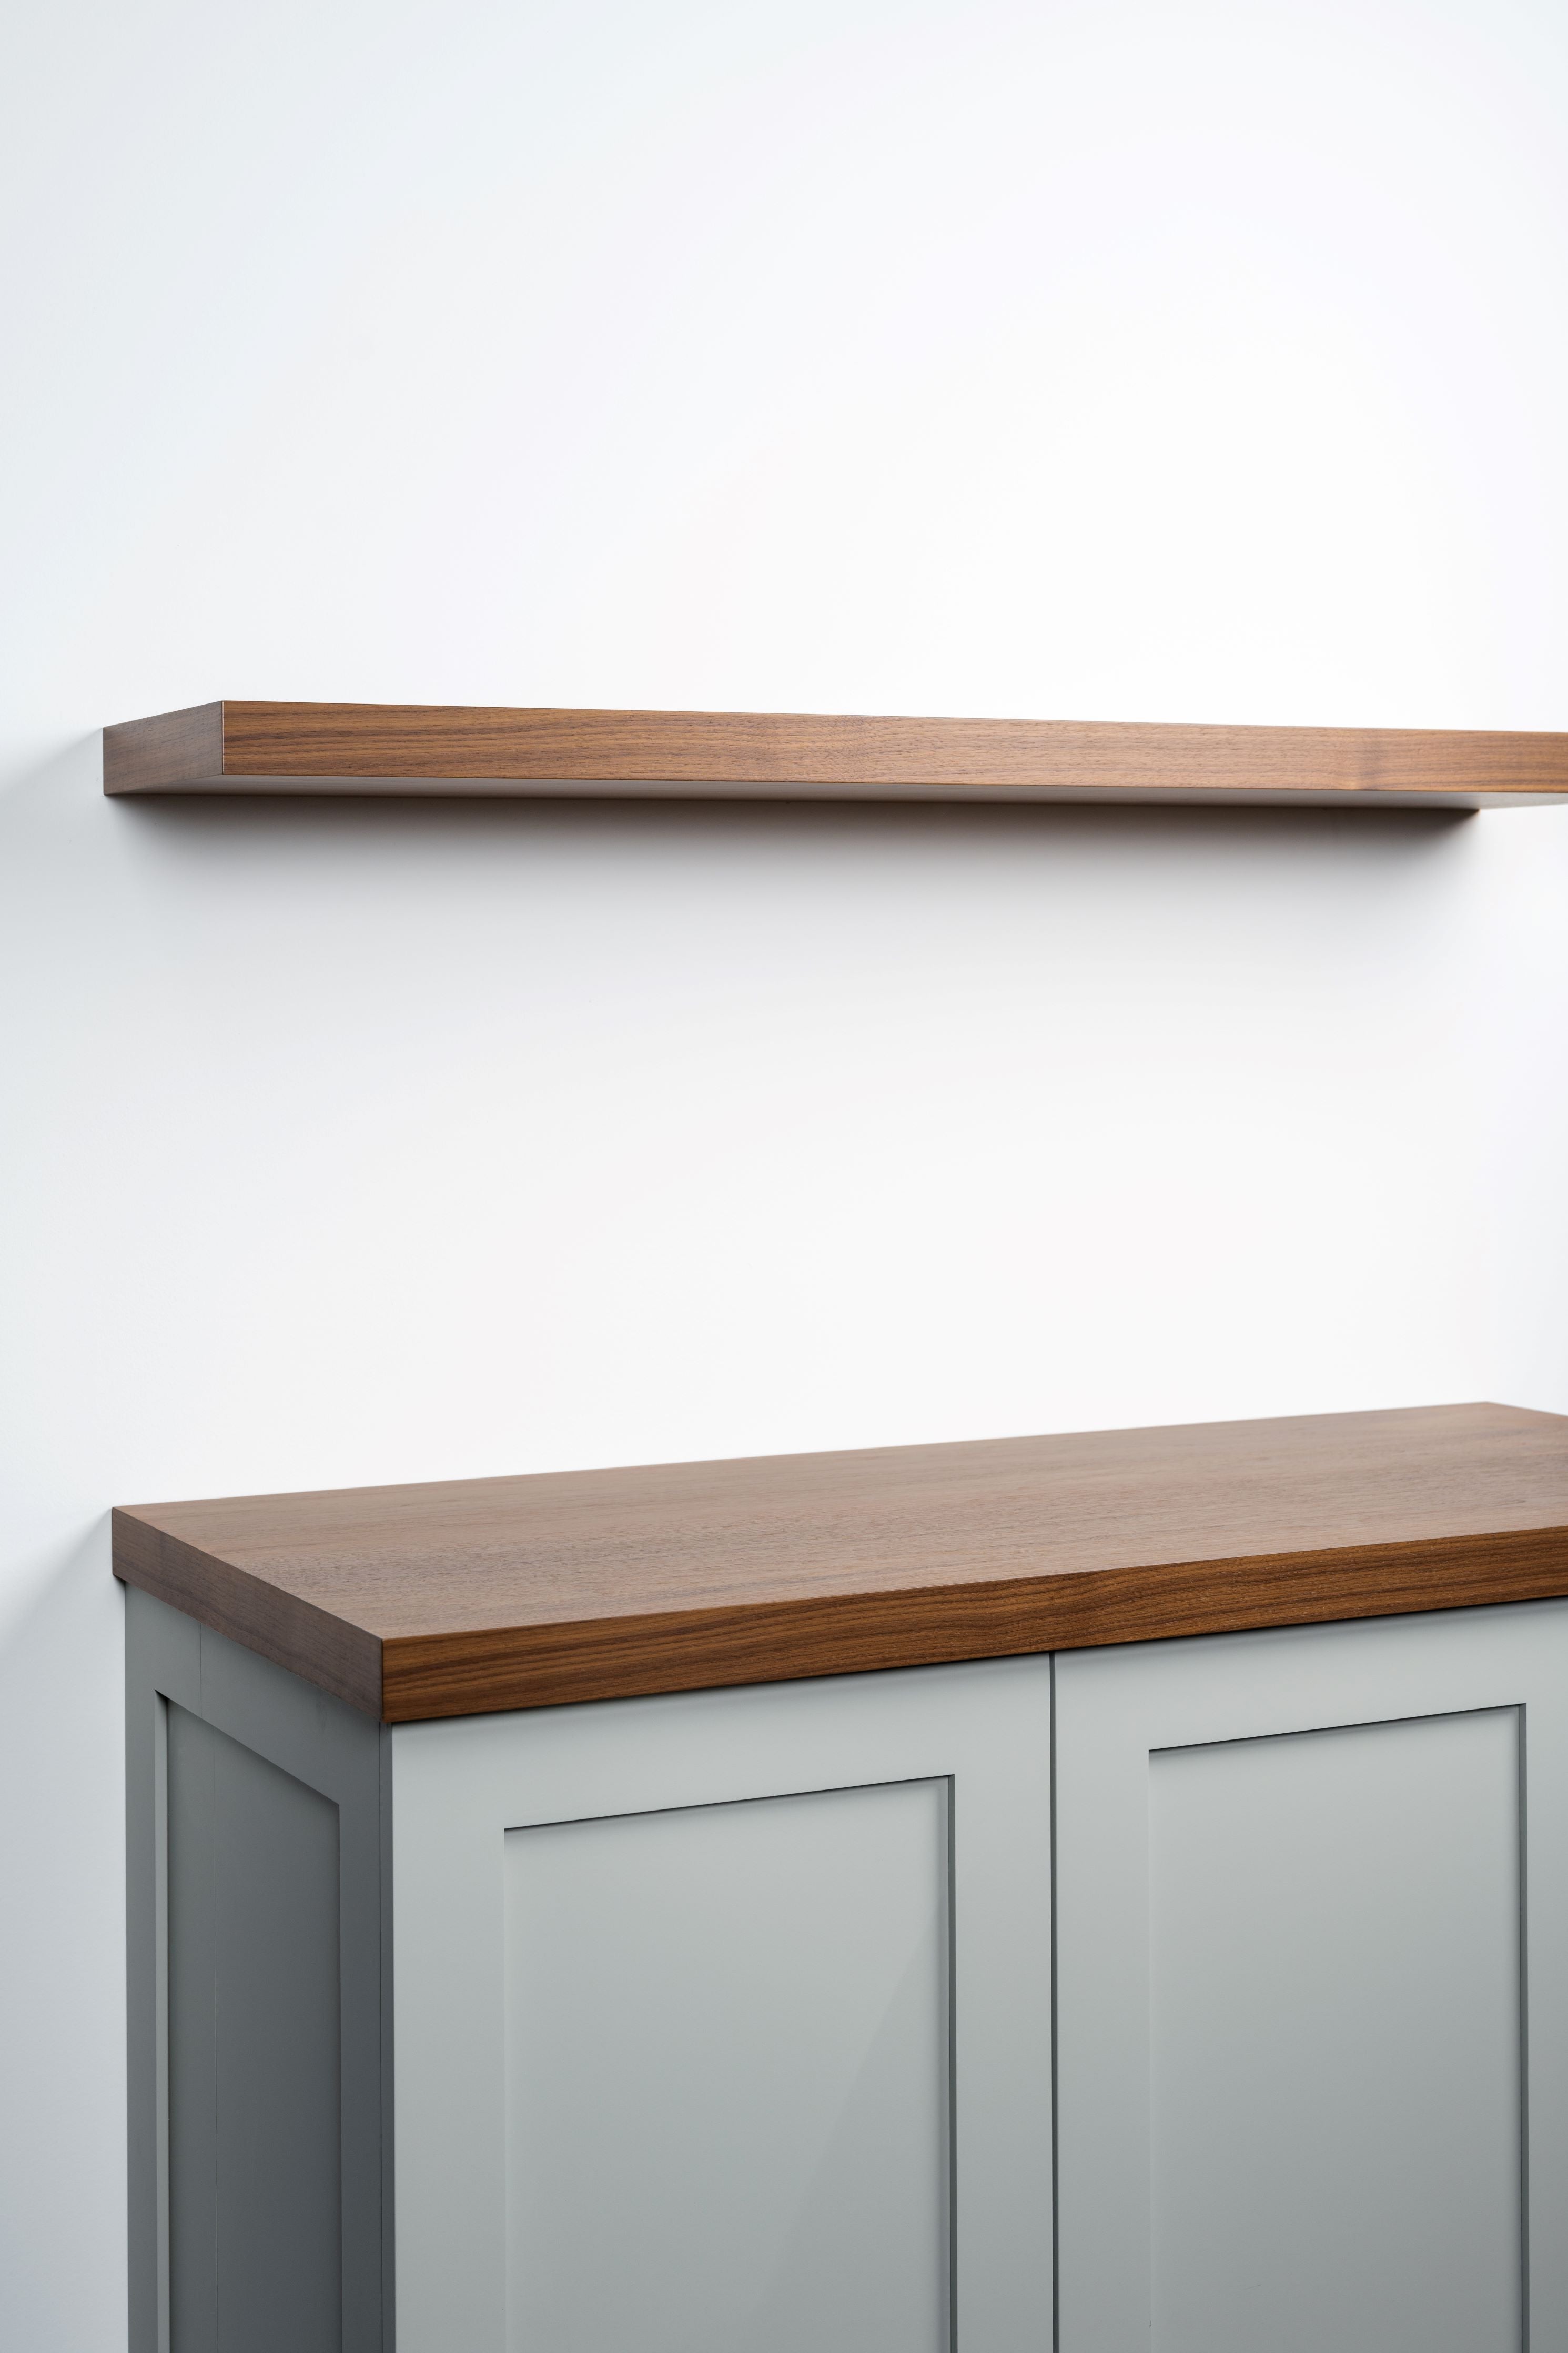 Walnut 2-4" thick Cabinet Top / Slab Shelf